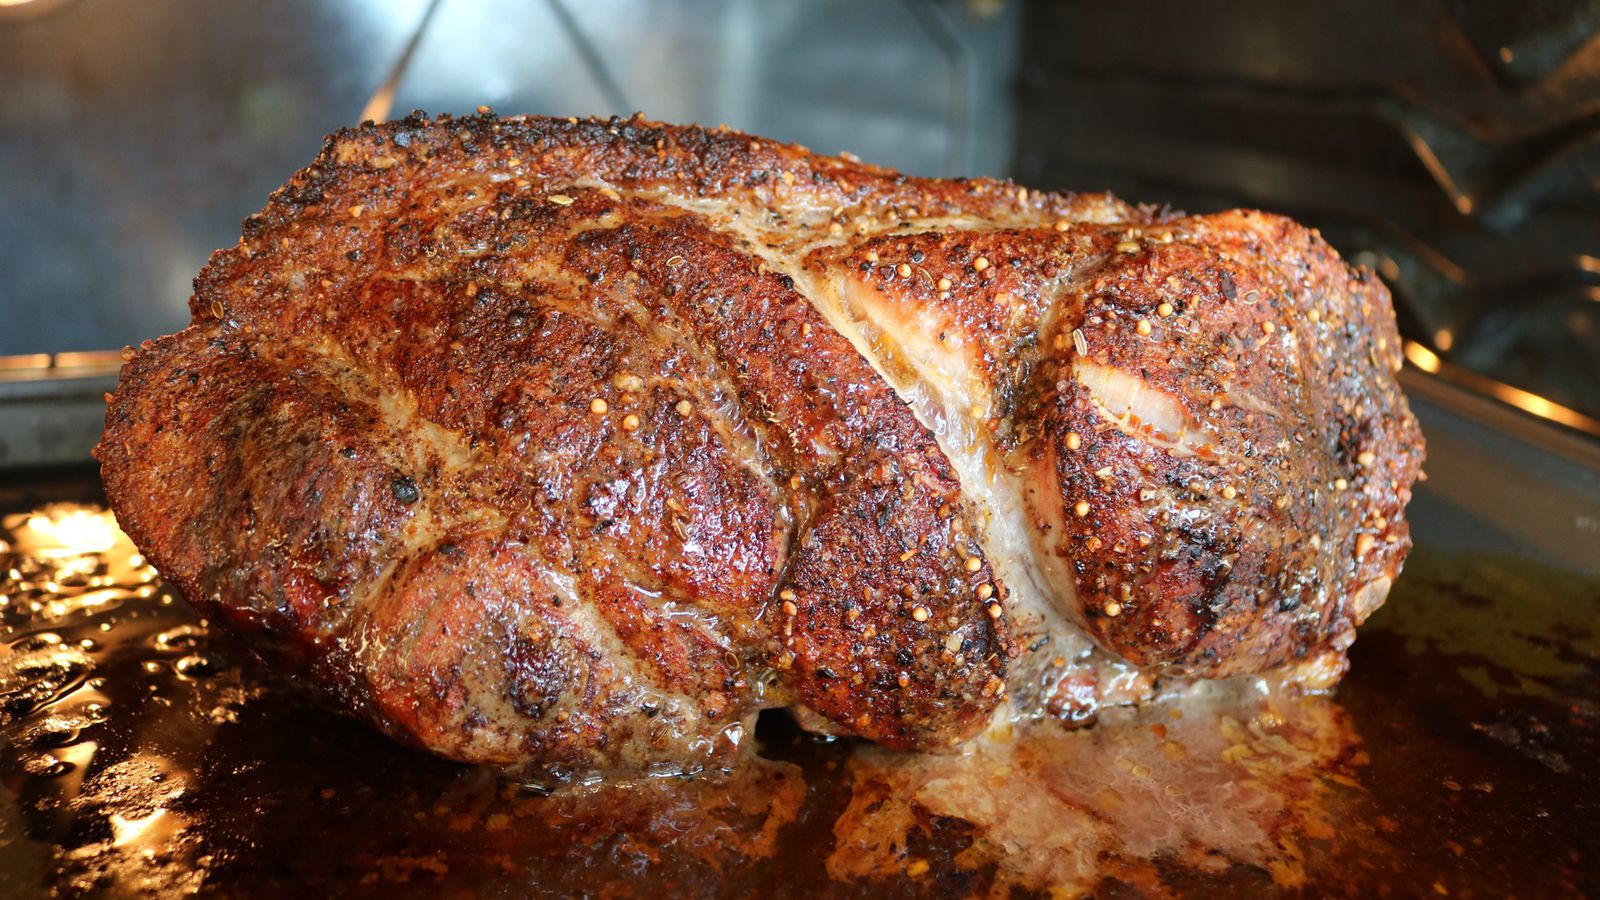 how long to cook pork shoulder at 350 degrees?